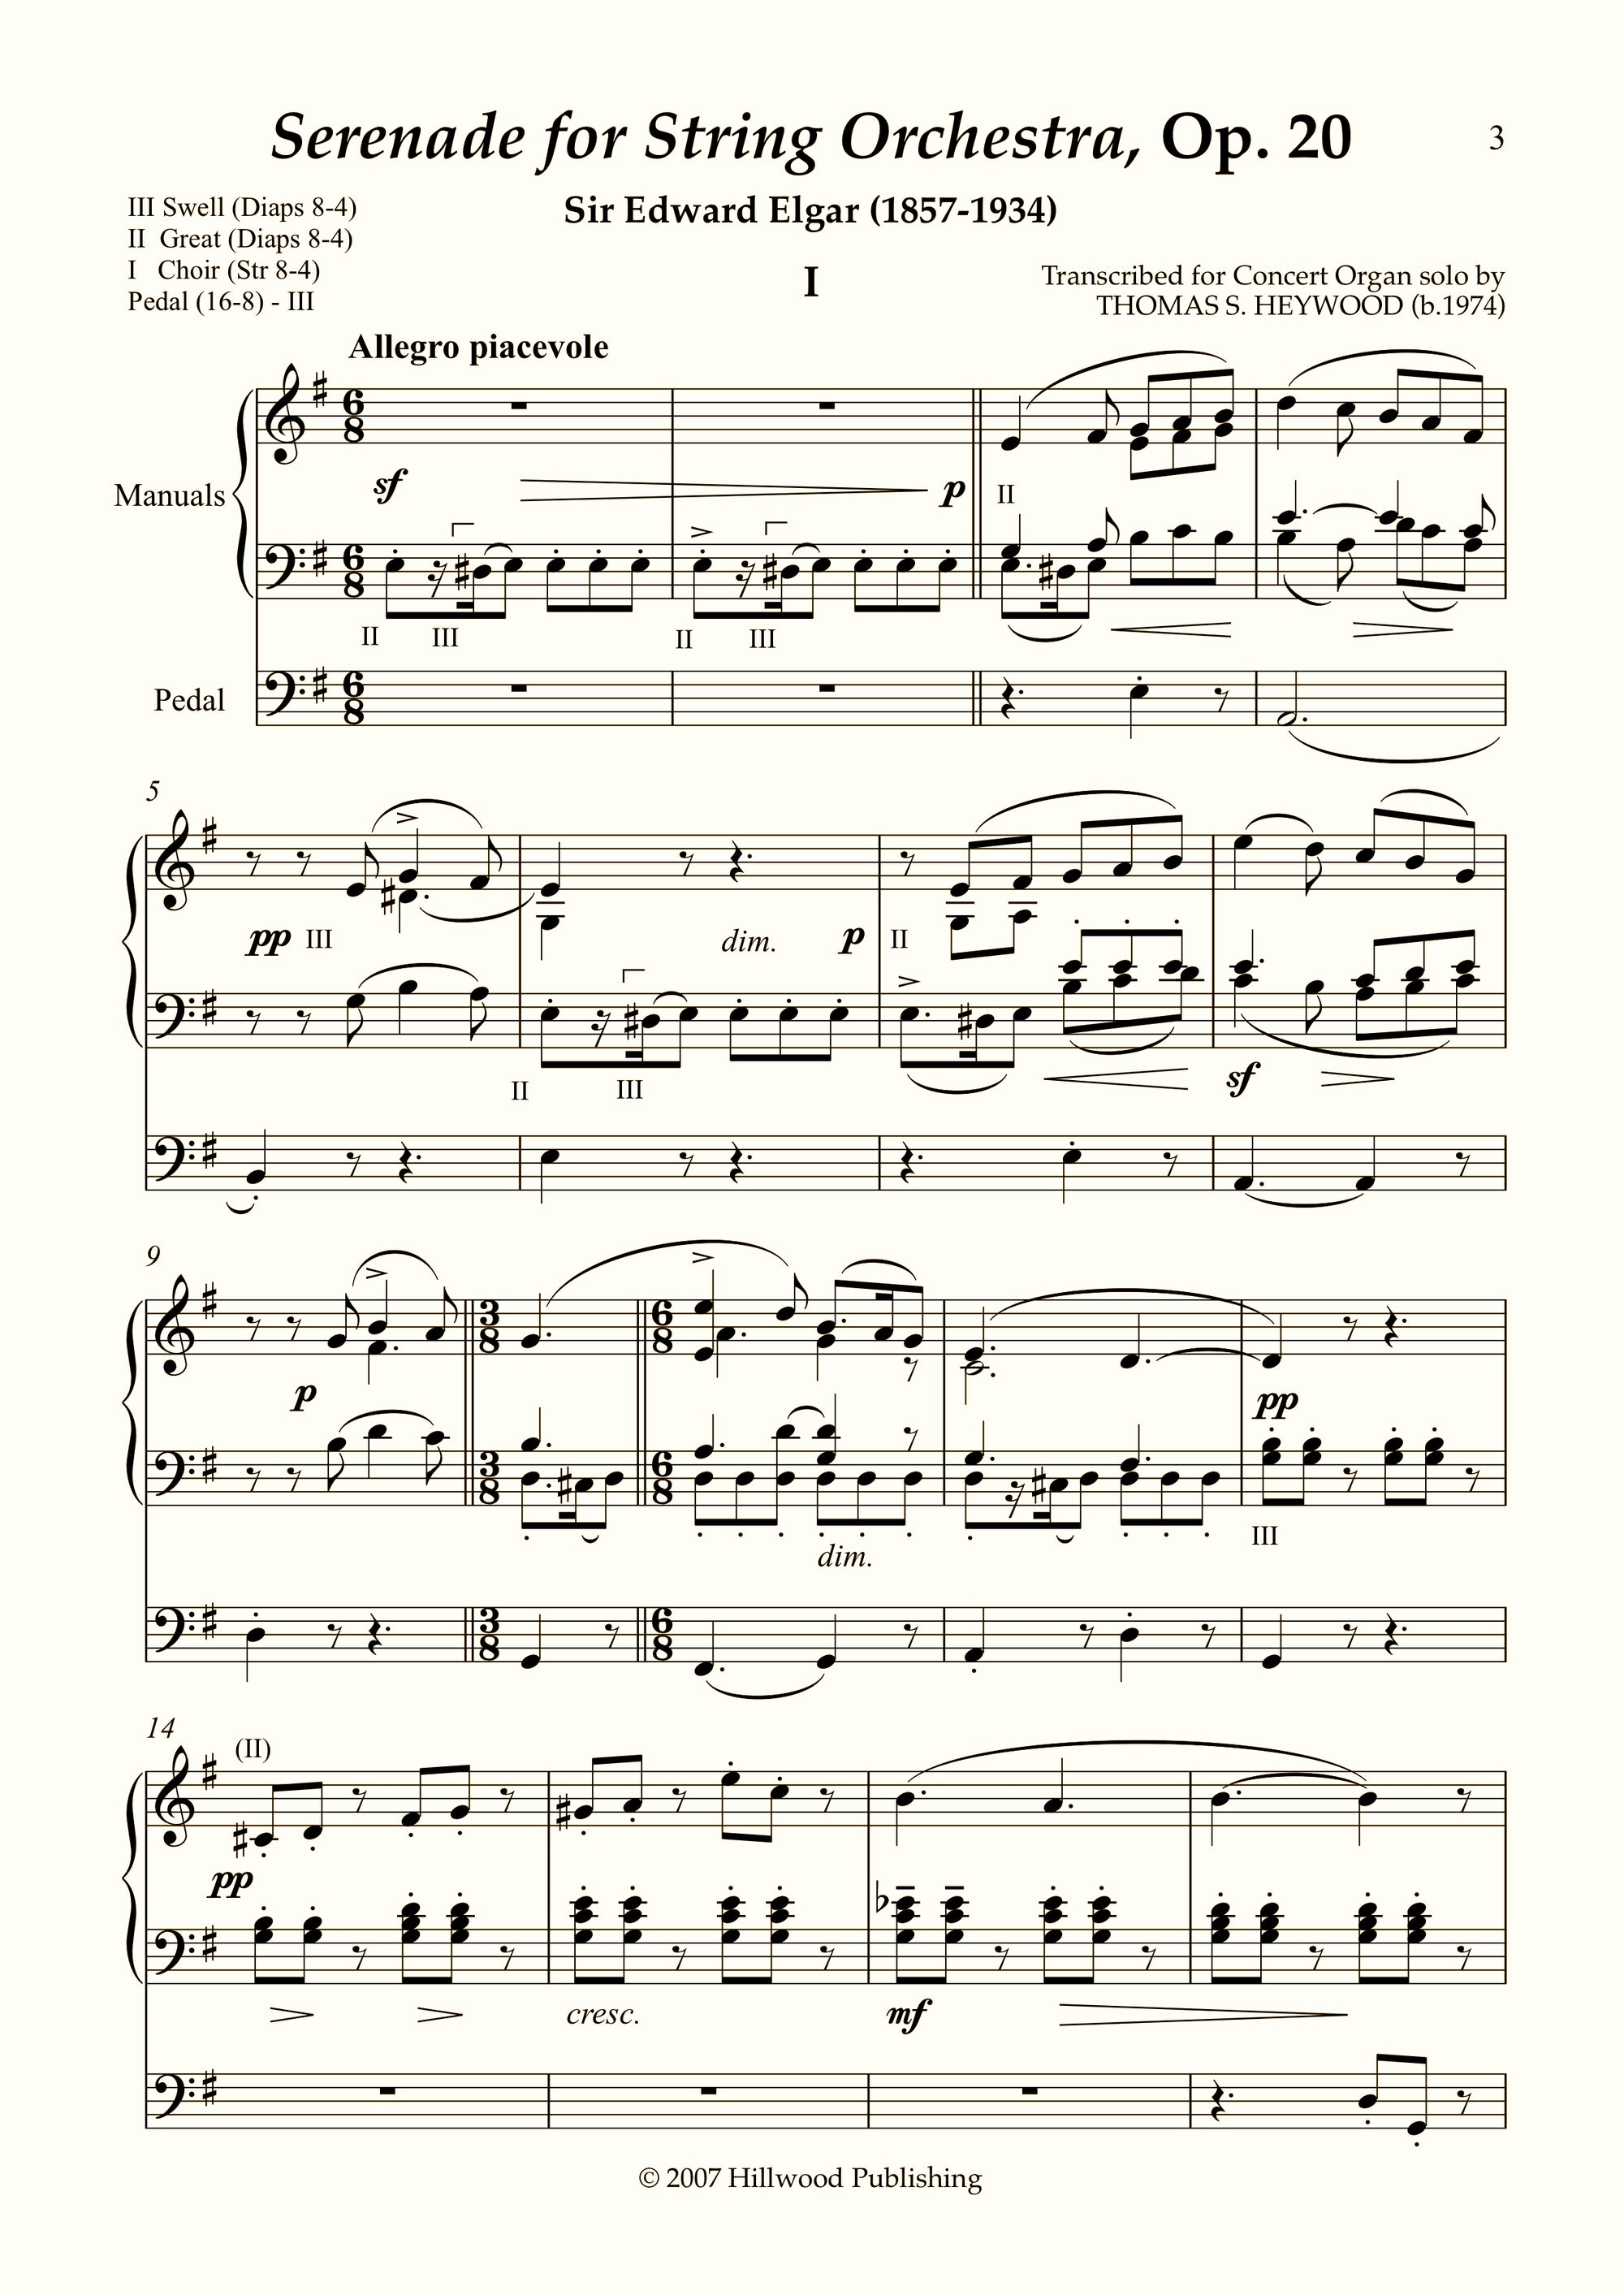 Elgar/Heywood - Allegro piacevole from Serenade for String Orchestra, Op. 20 (Score)